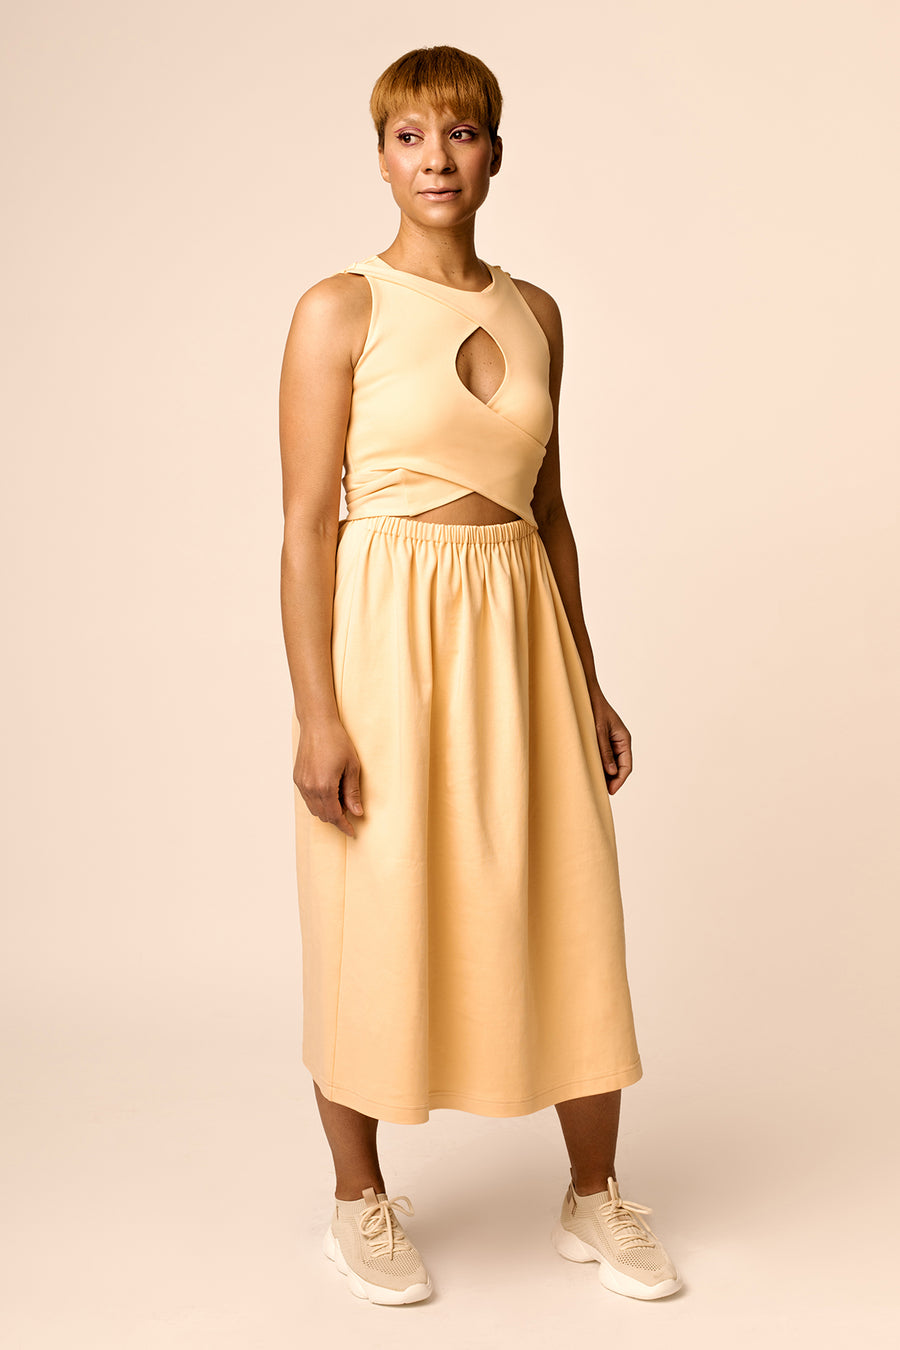 Named Clothing - Sisko Interlace Dress & Top